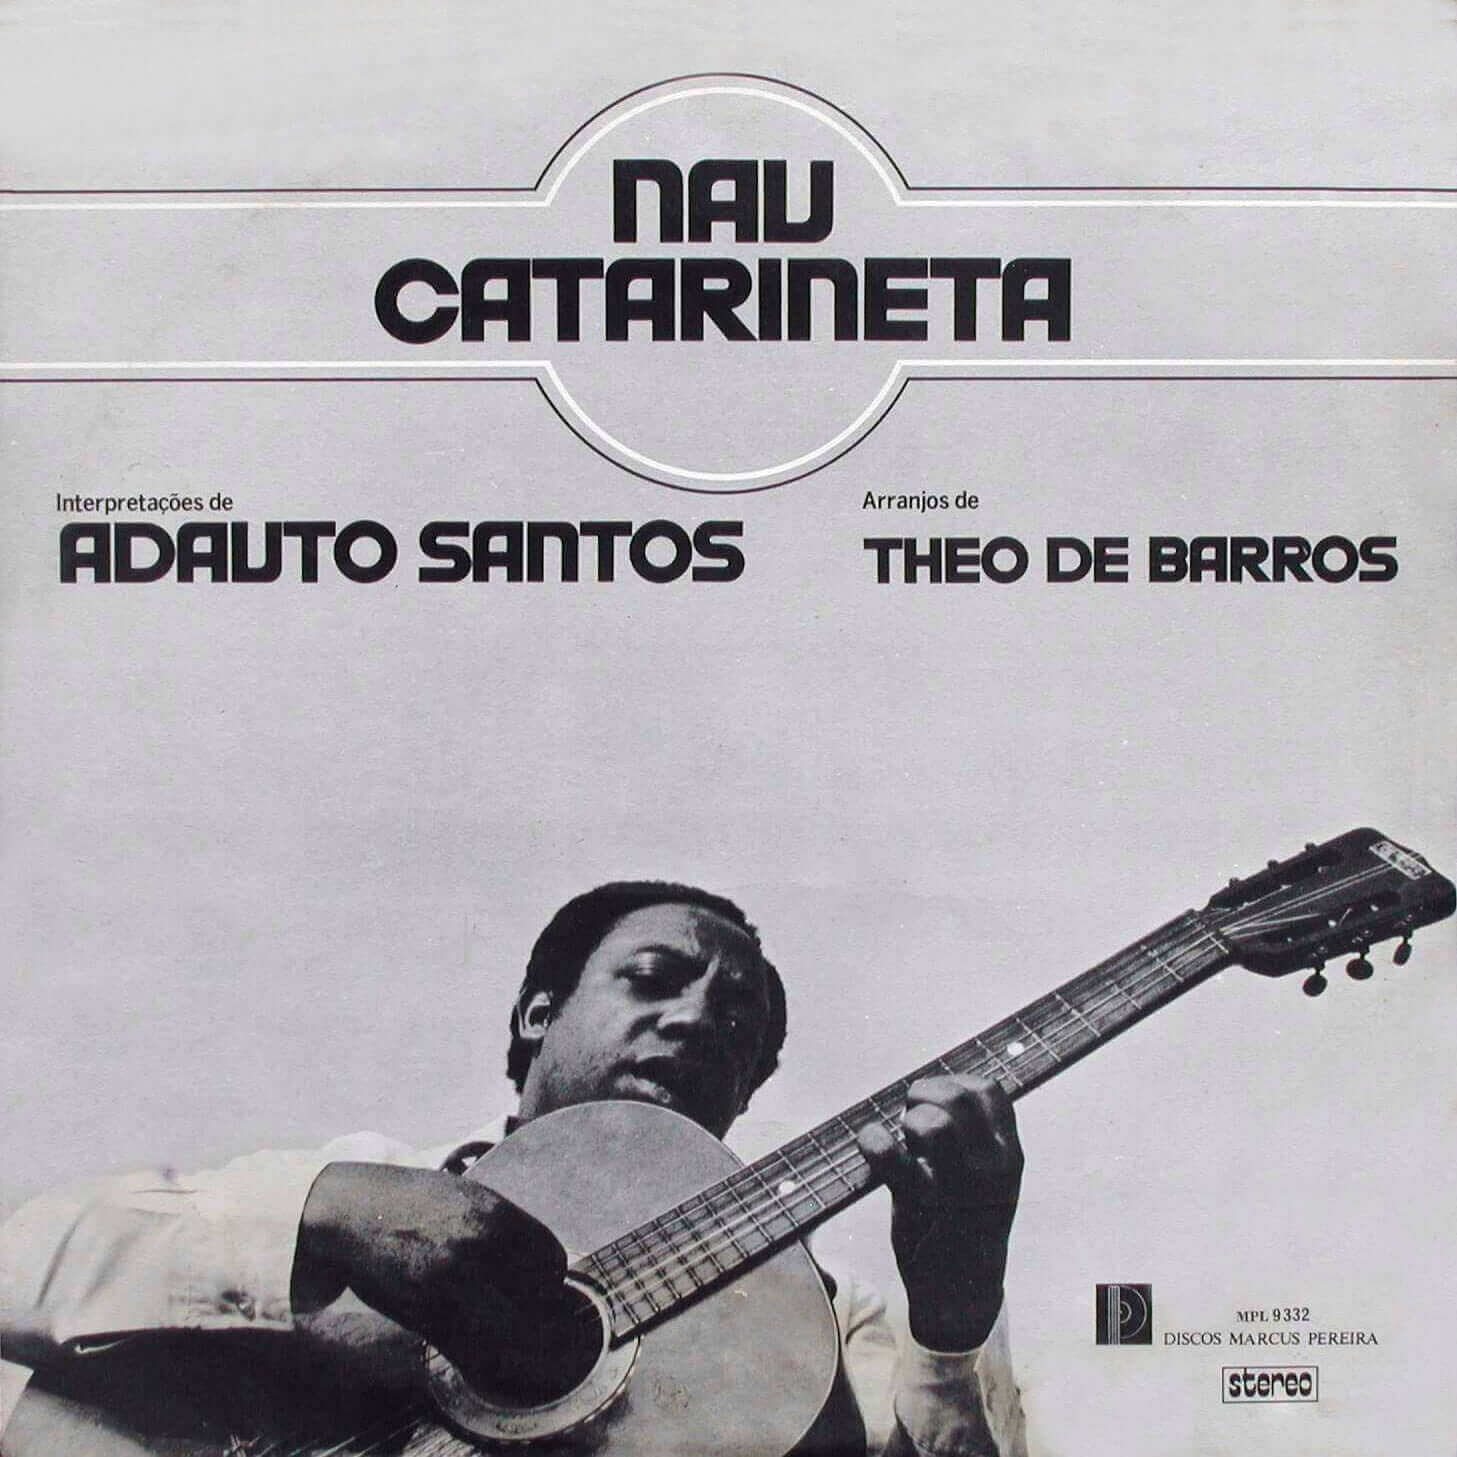 Nau Catarineta – 1974